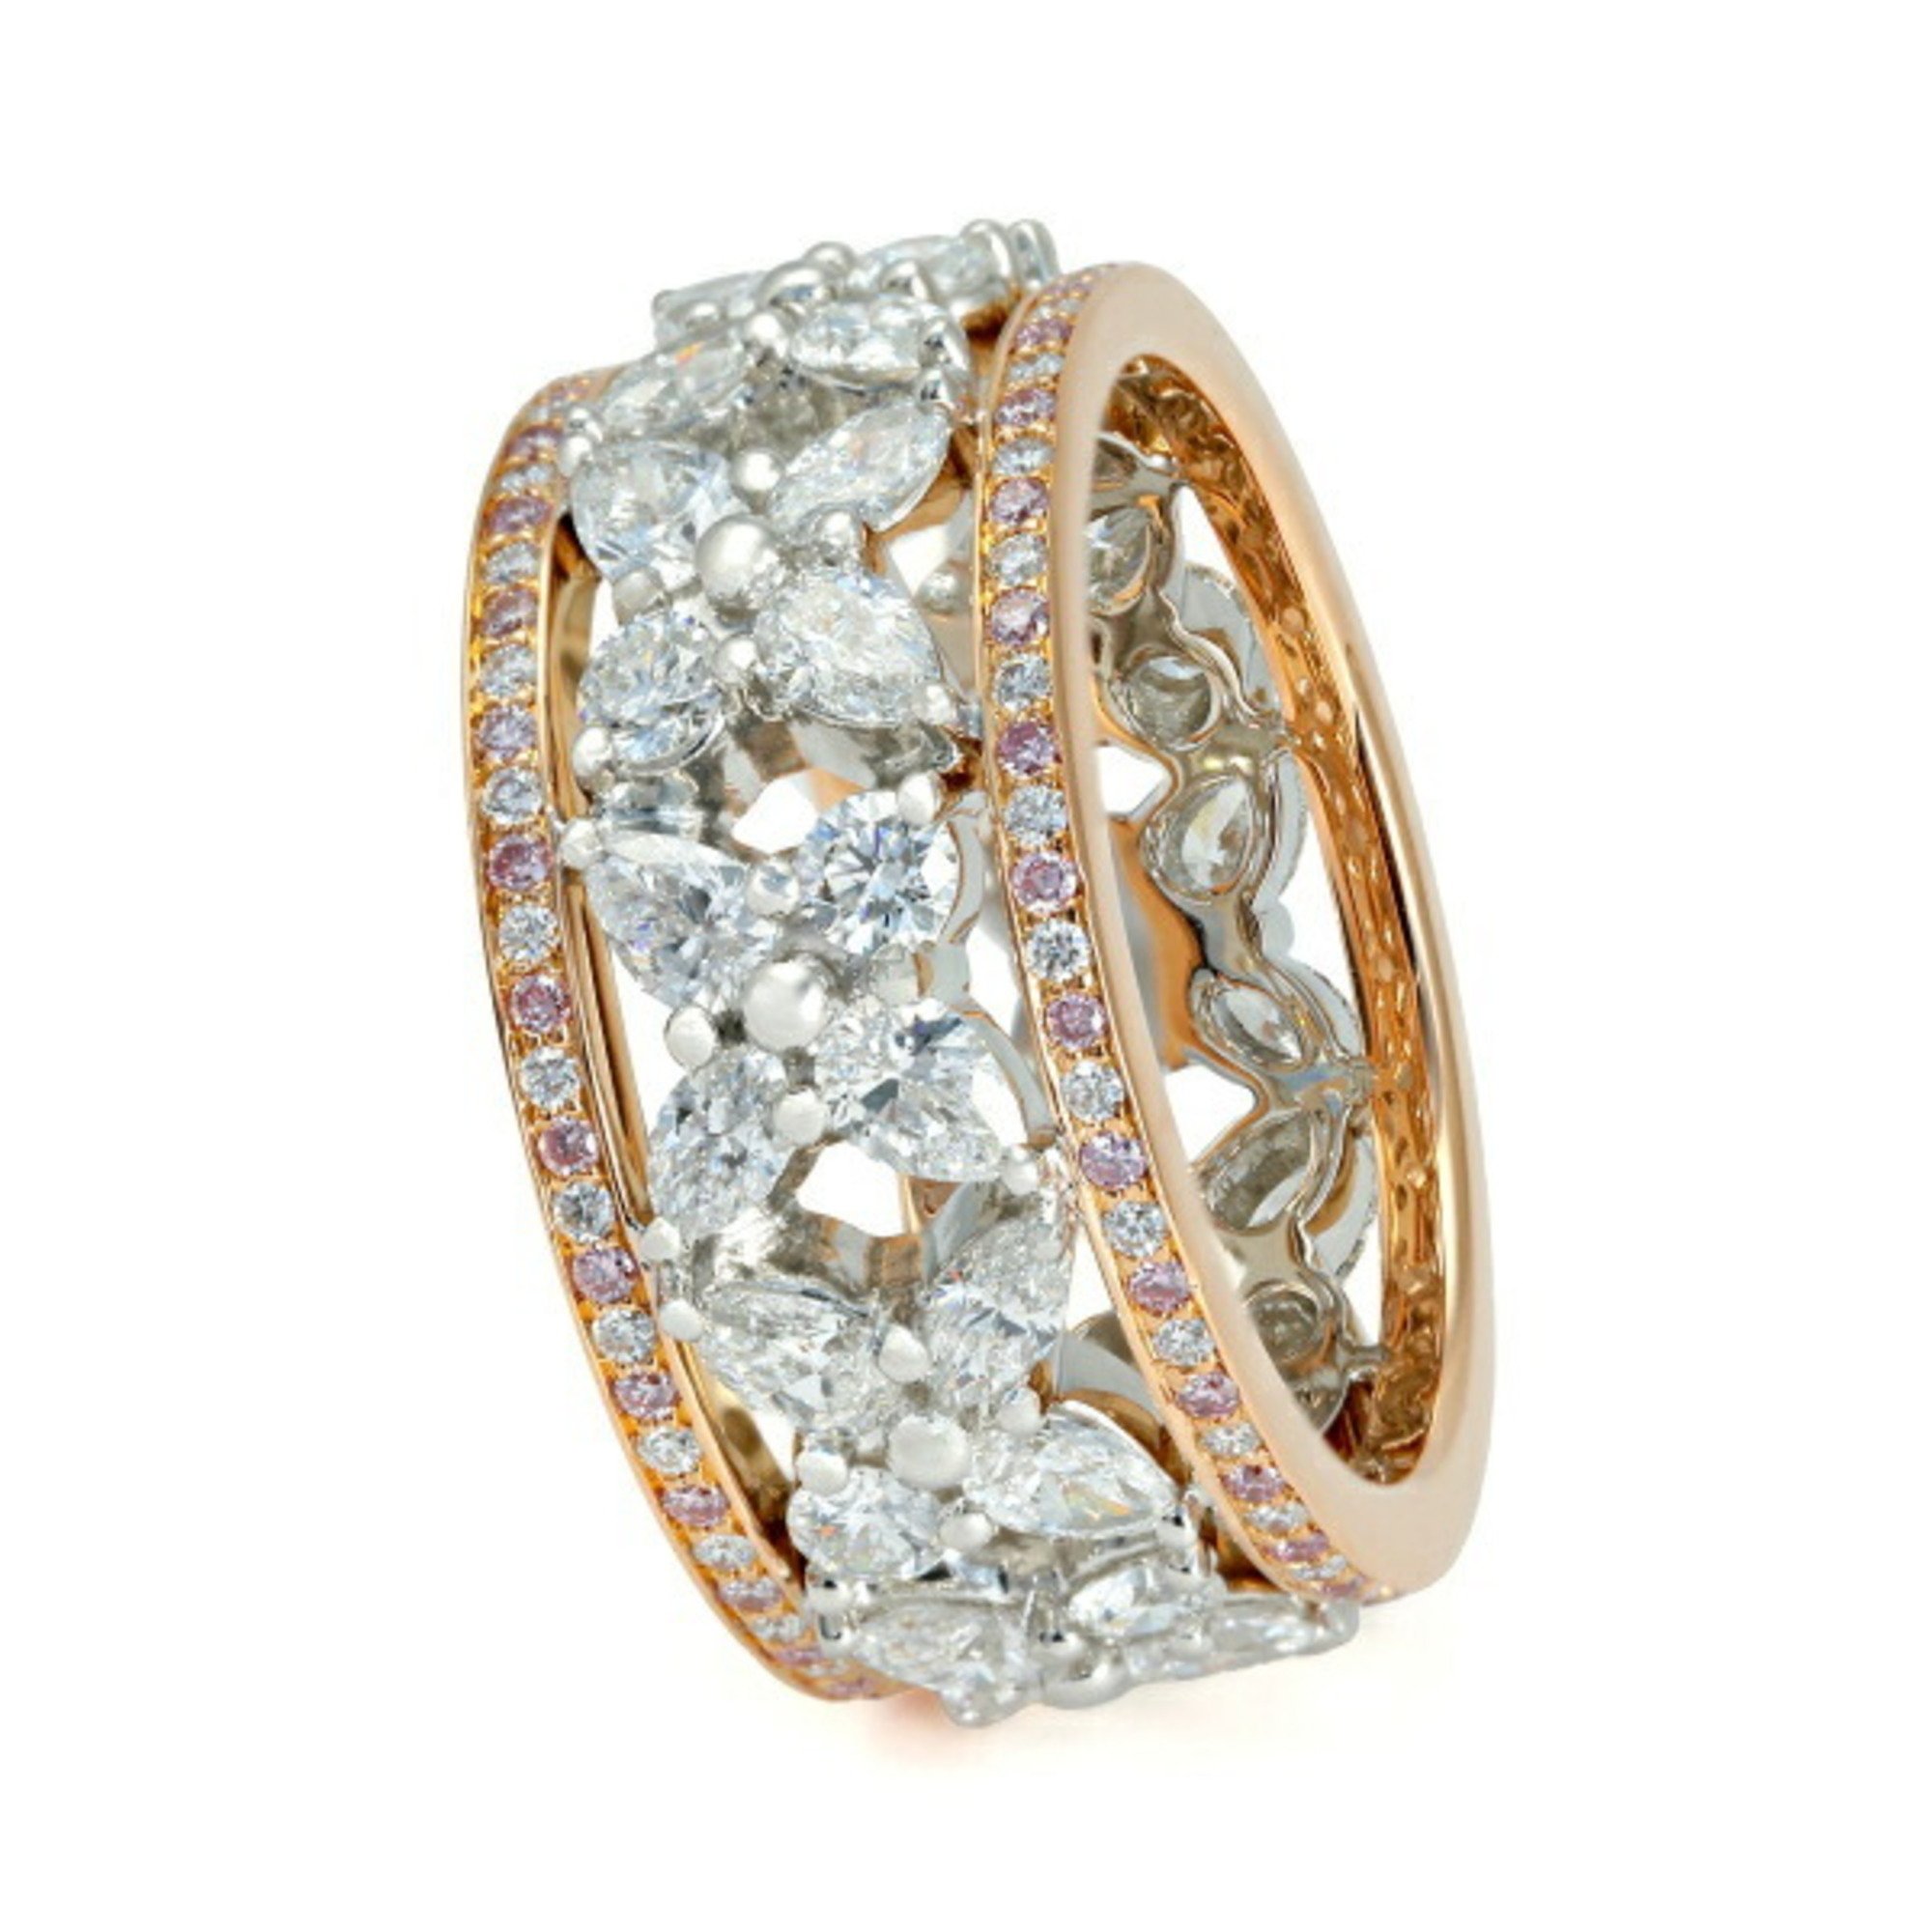 Tiffany Victoria Diamond Band Ring K18PG Pink Gold K18WG White